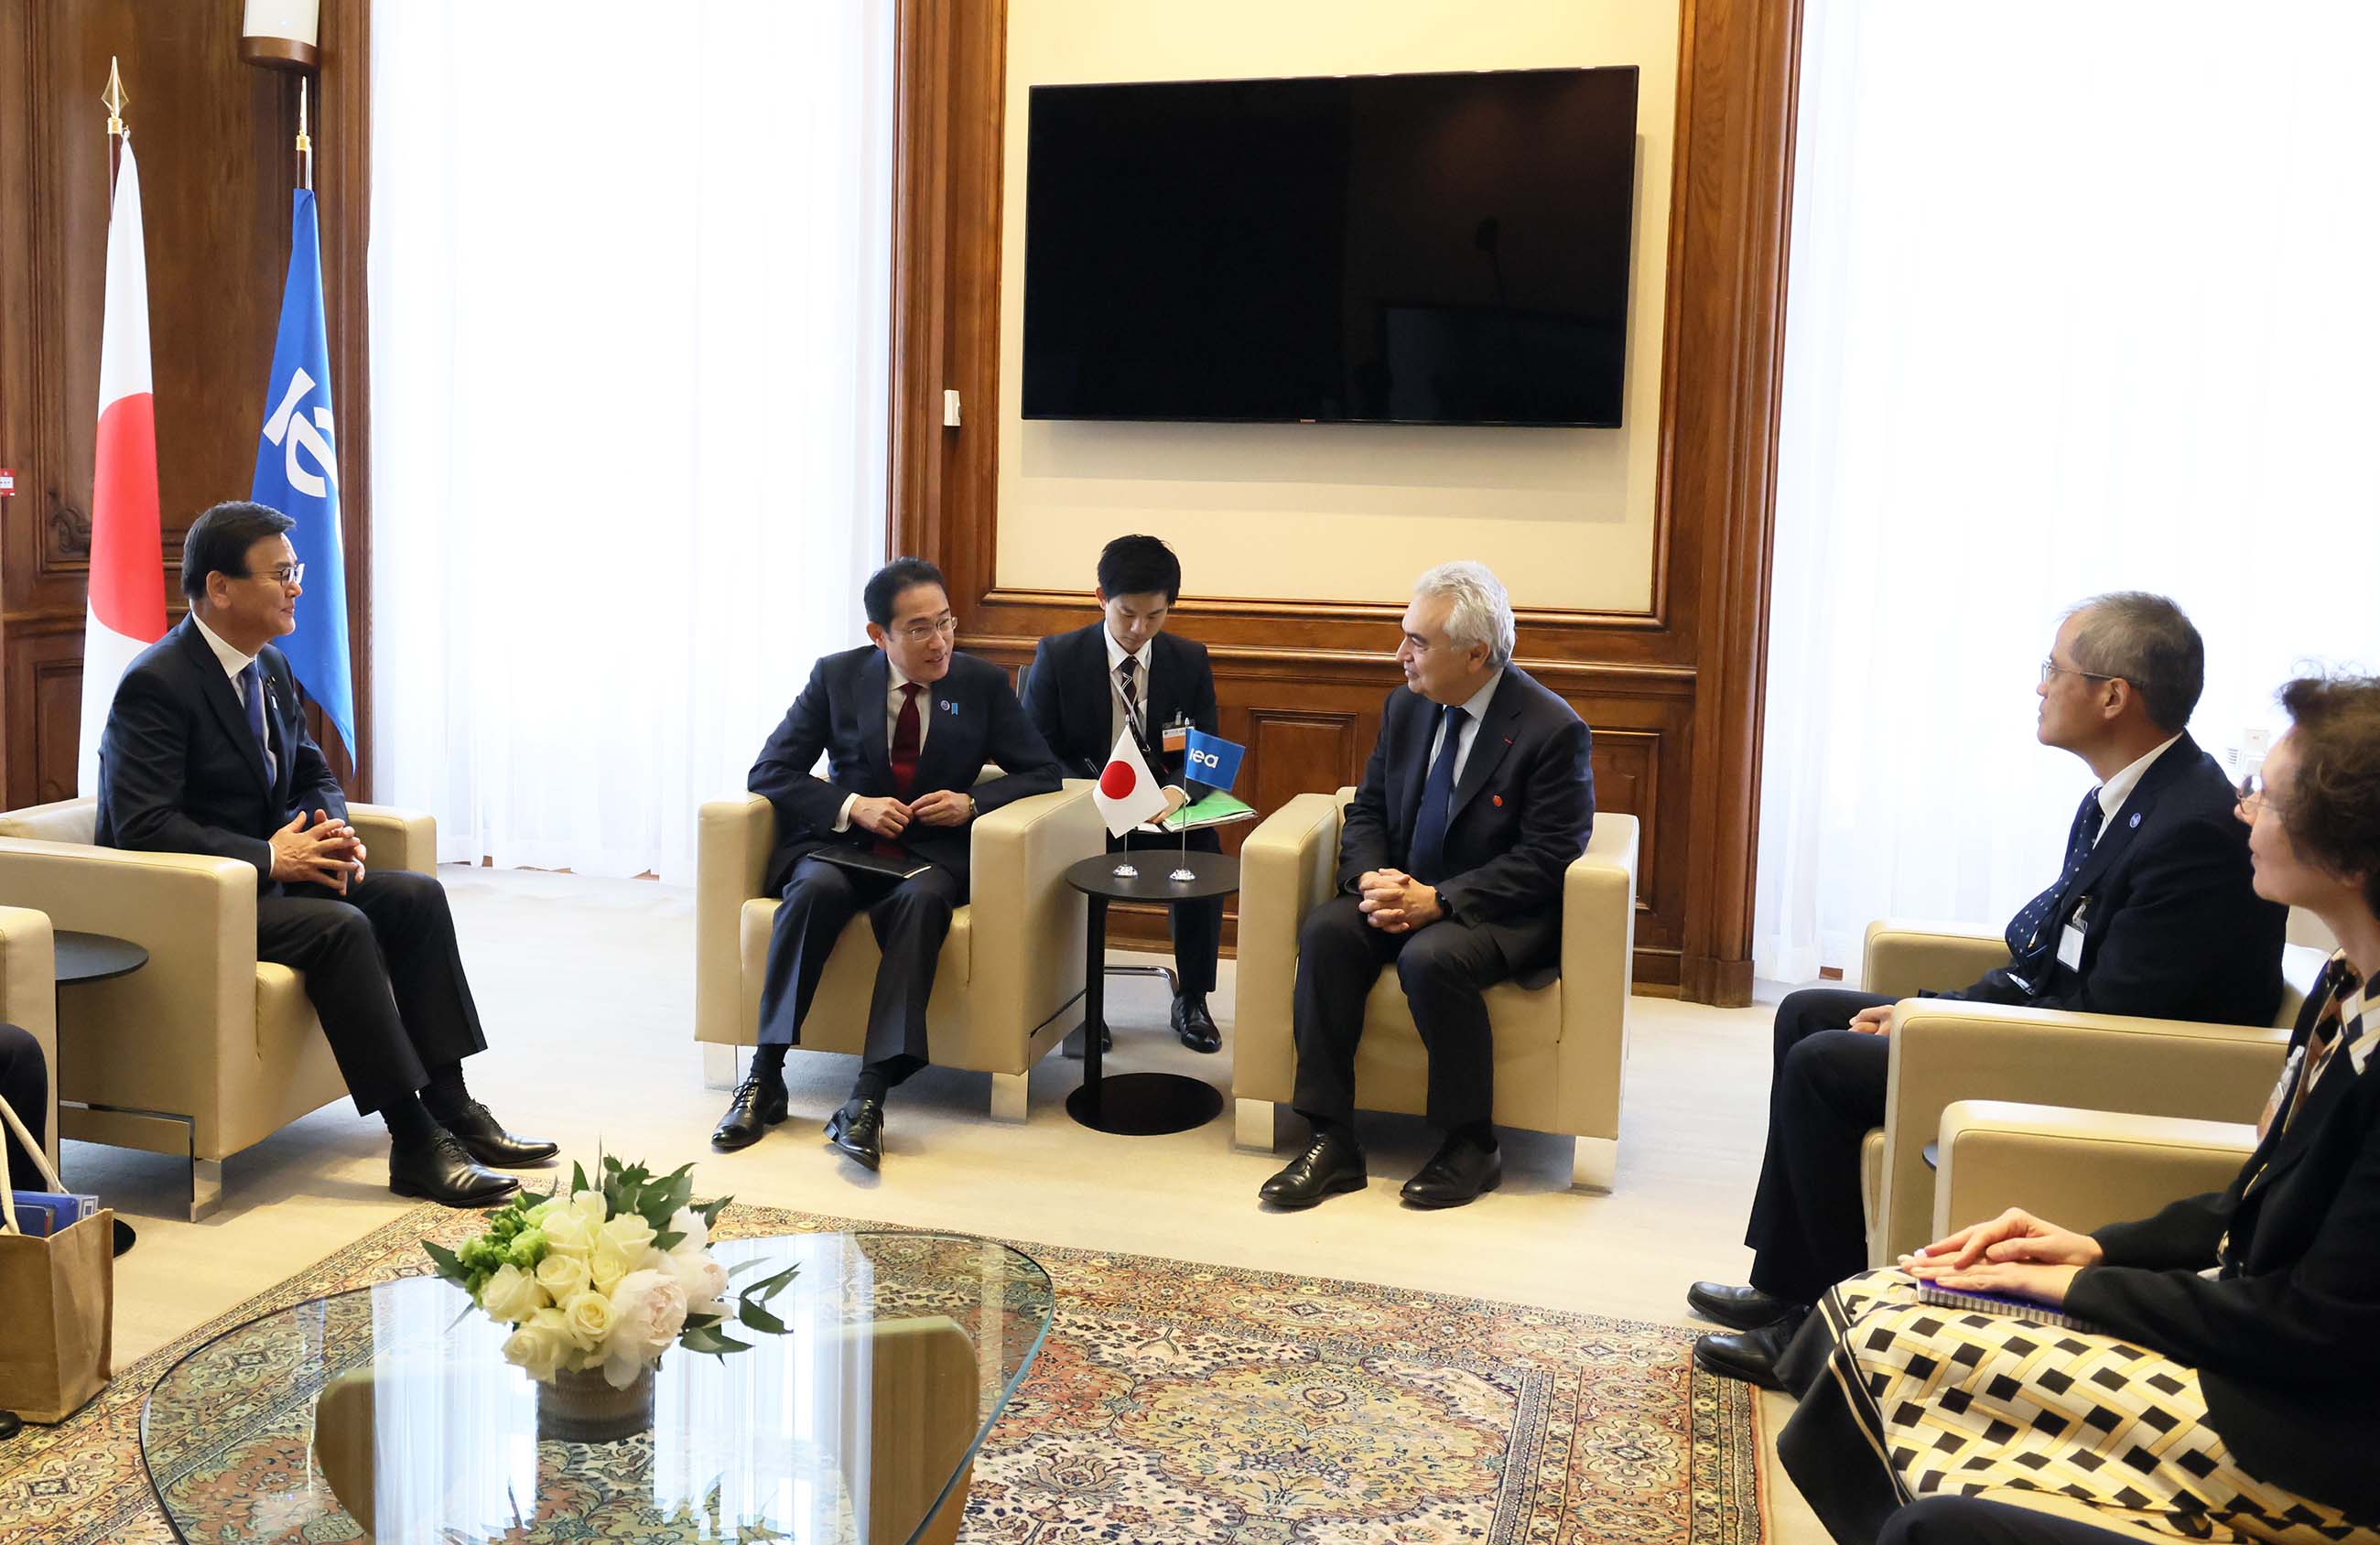 Prime Minister Kishida receiving a courtesy call from Executive Director Birol of the IEA 